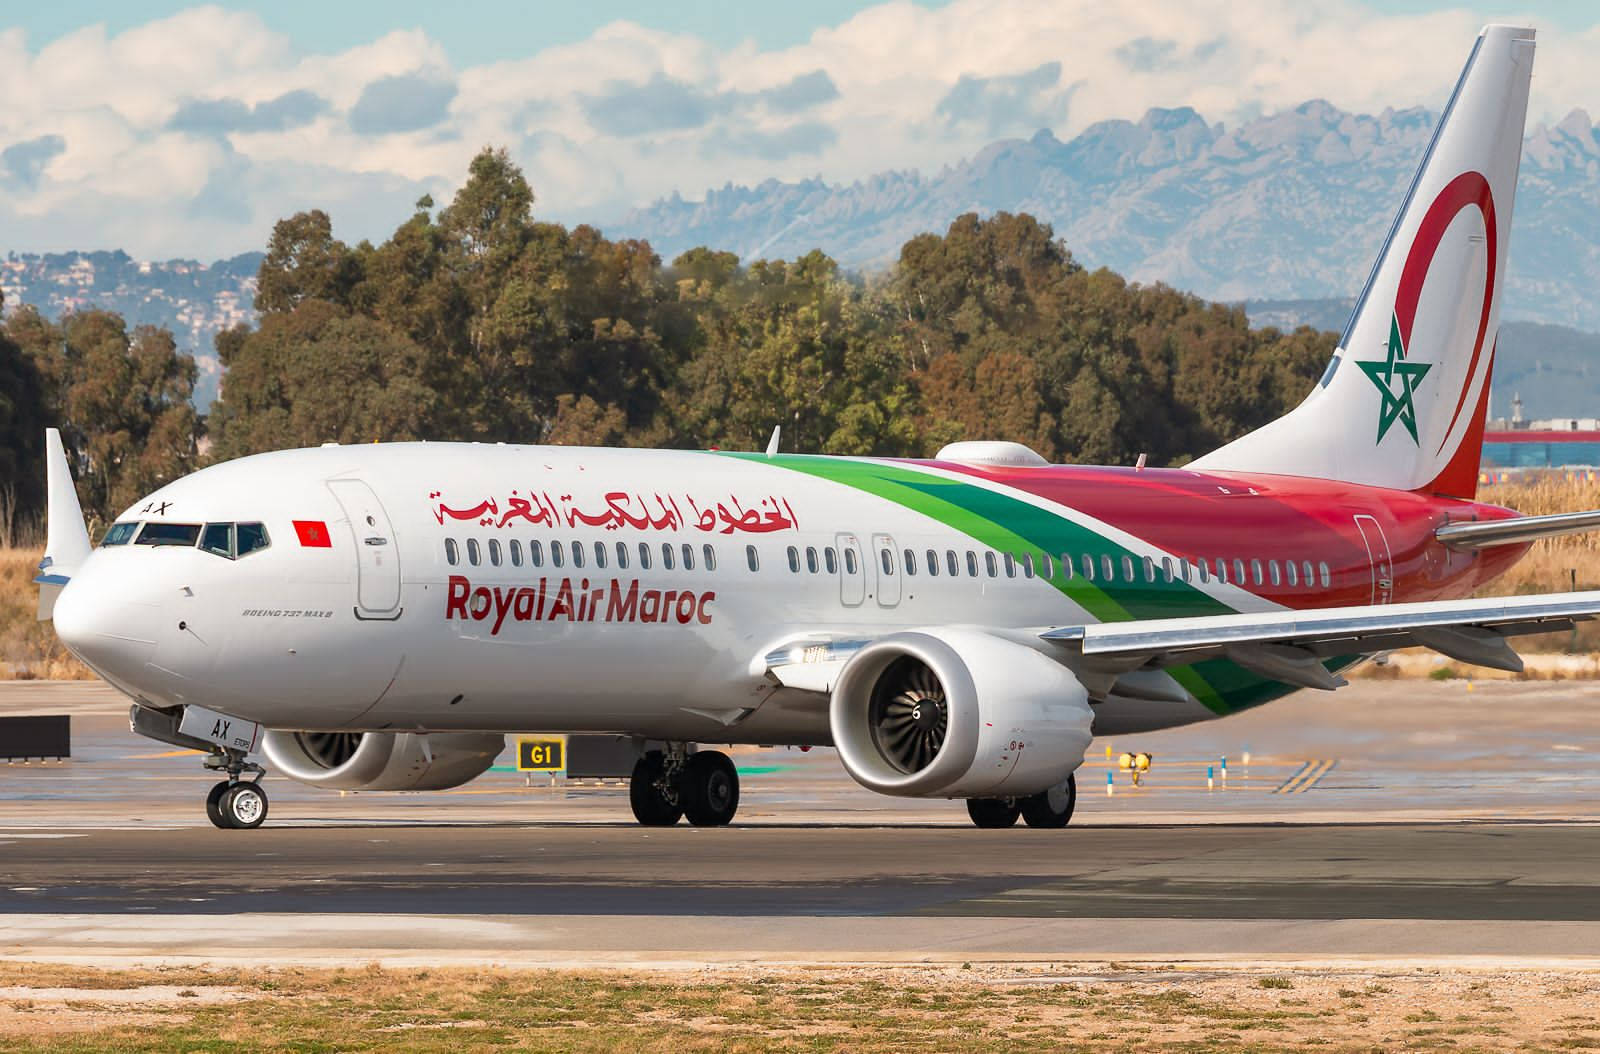 Royal Air Maroc Plane On Runway Wallpaper